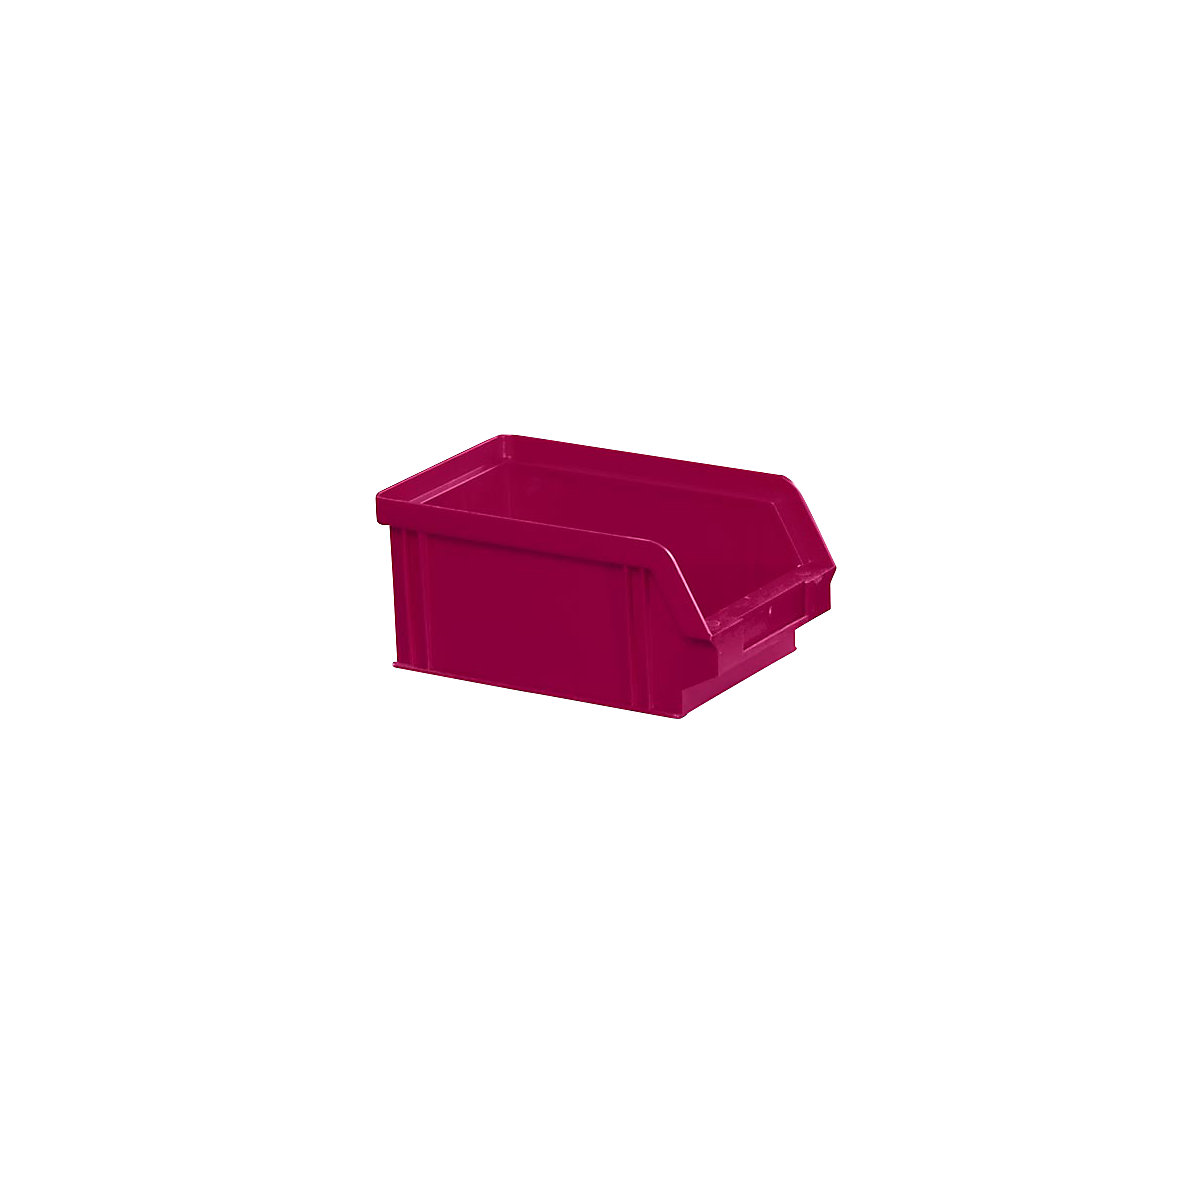 Magazijnbak van polystyrol, l x b x h = 160 x 102 x 75 mm, VE = 32 stuks, rood